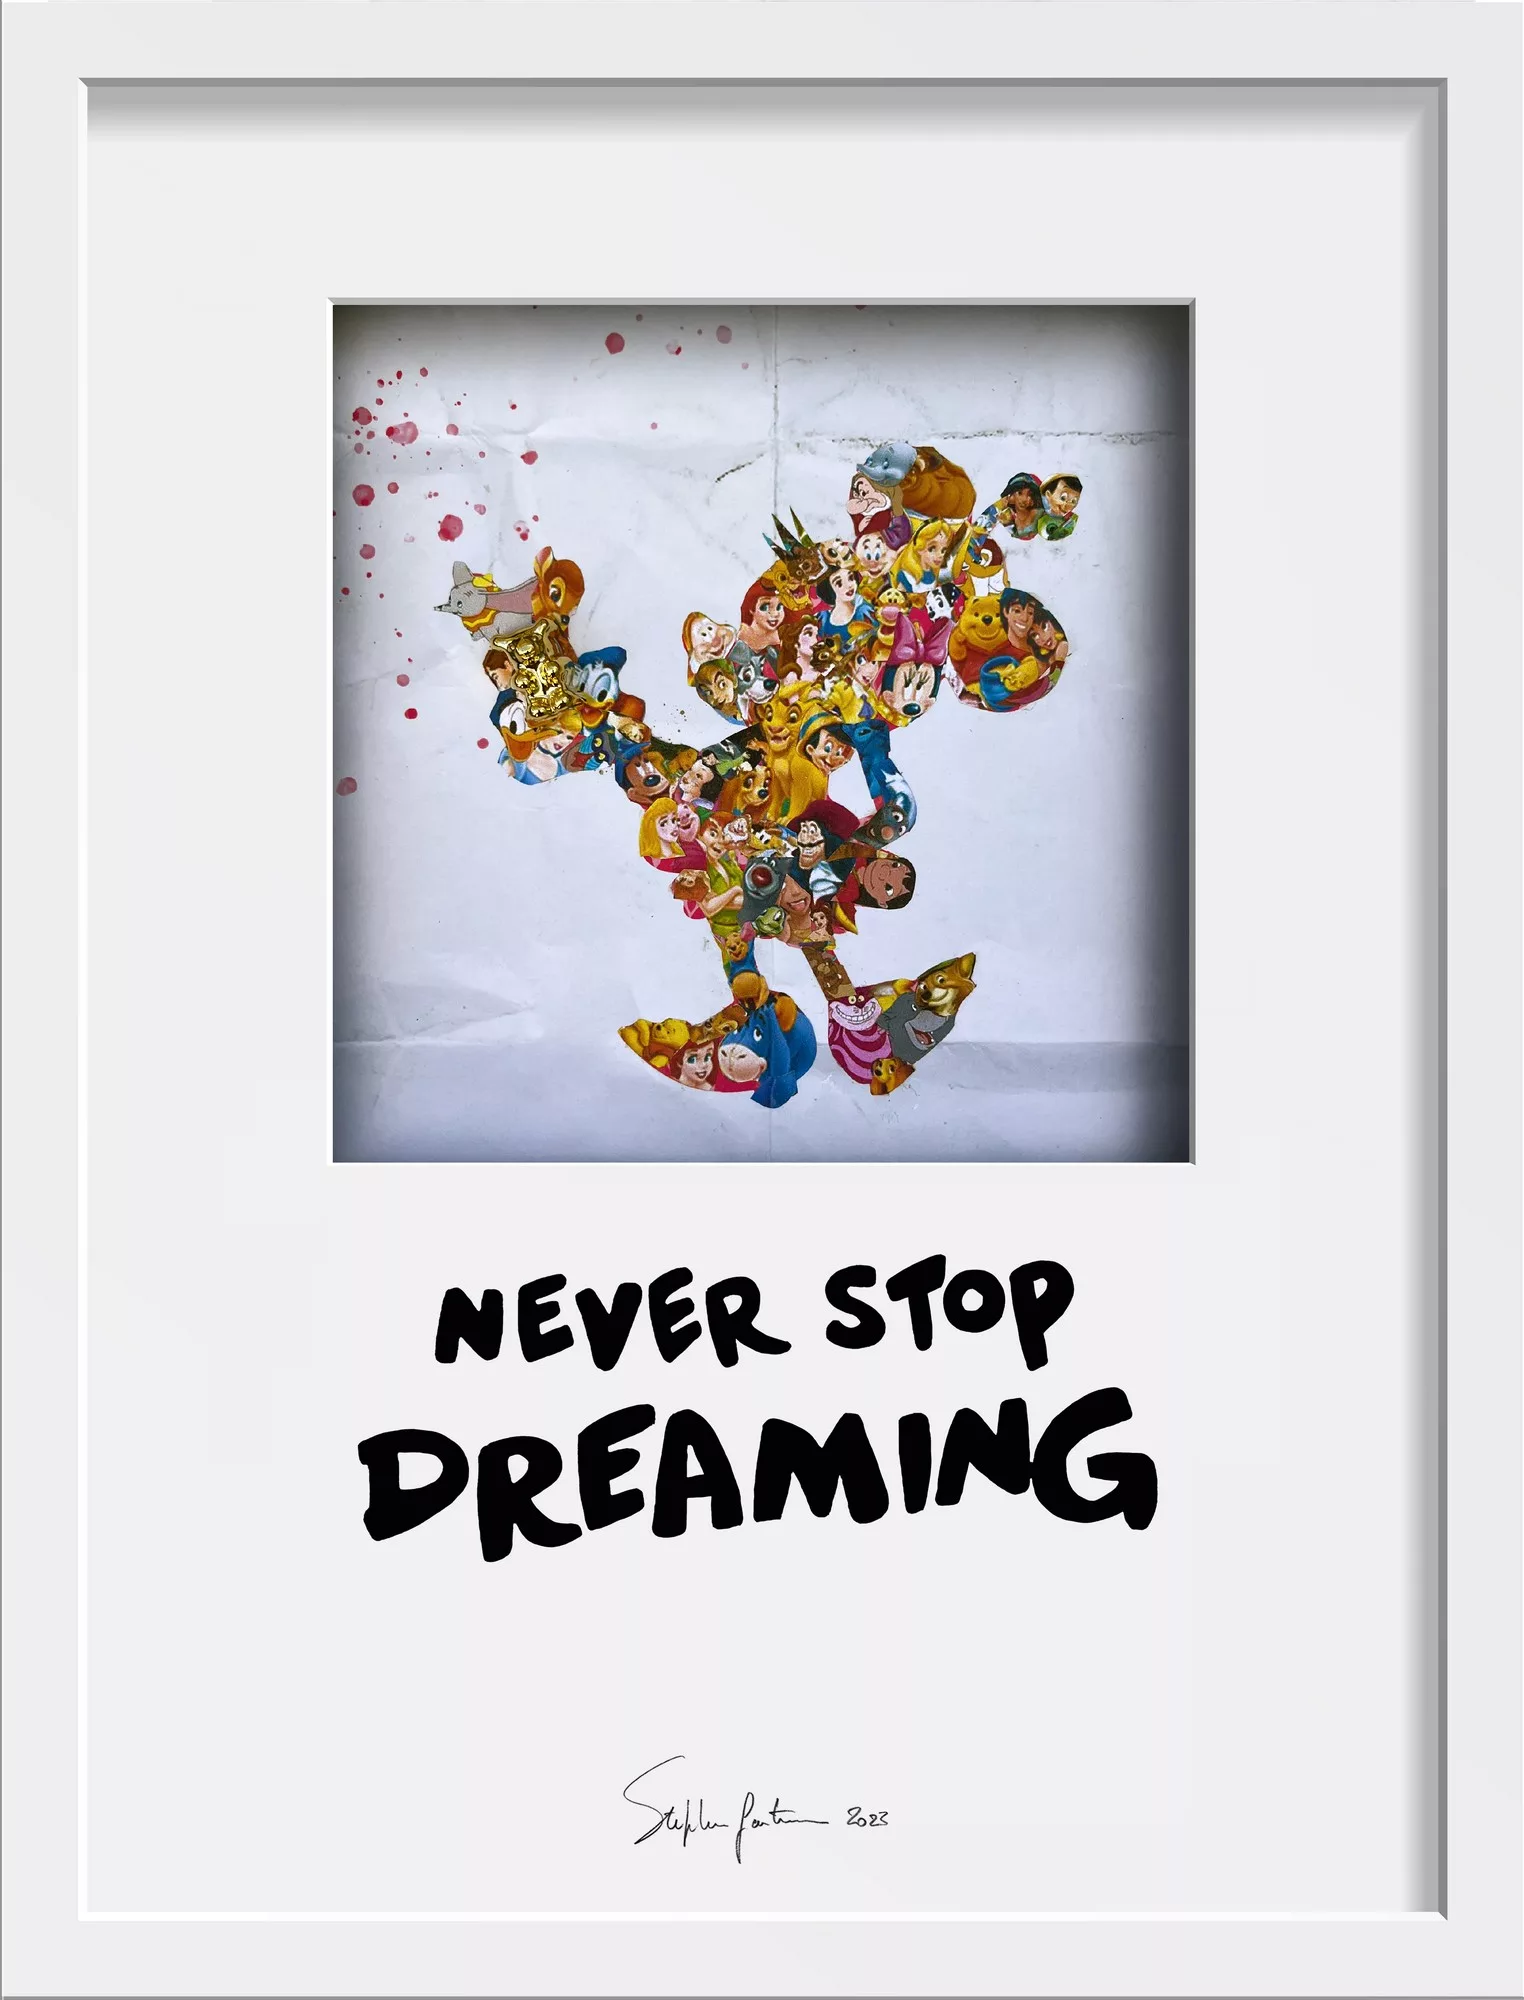 Handmade Never stop dreaming, 40x30cm